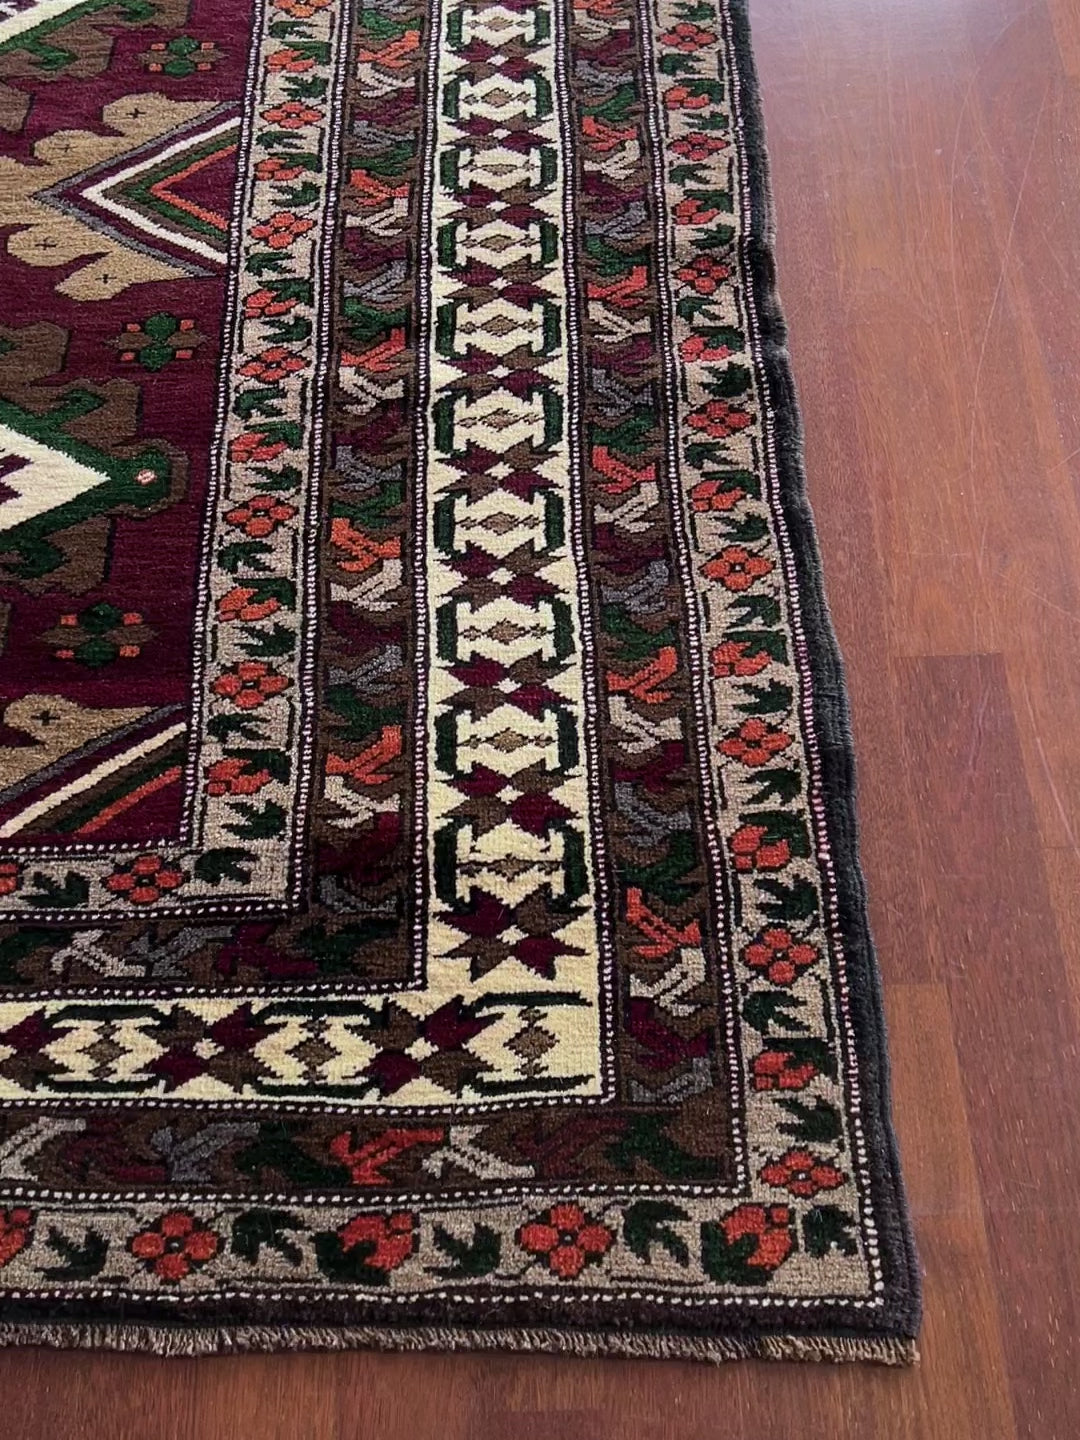 kars turkish rug shop palo alto oriental rug san francisco bay area buy vintage rug berkeley online rug shopping california ca canada toronto